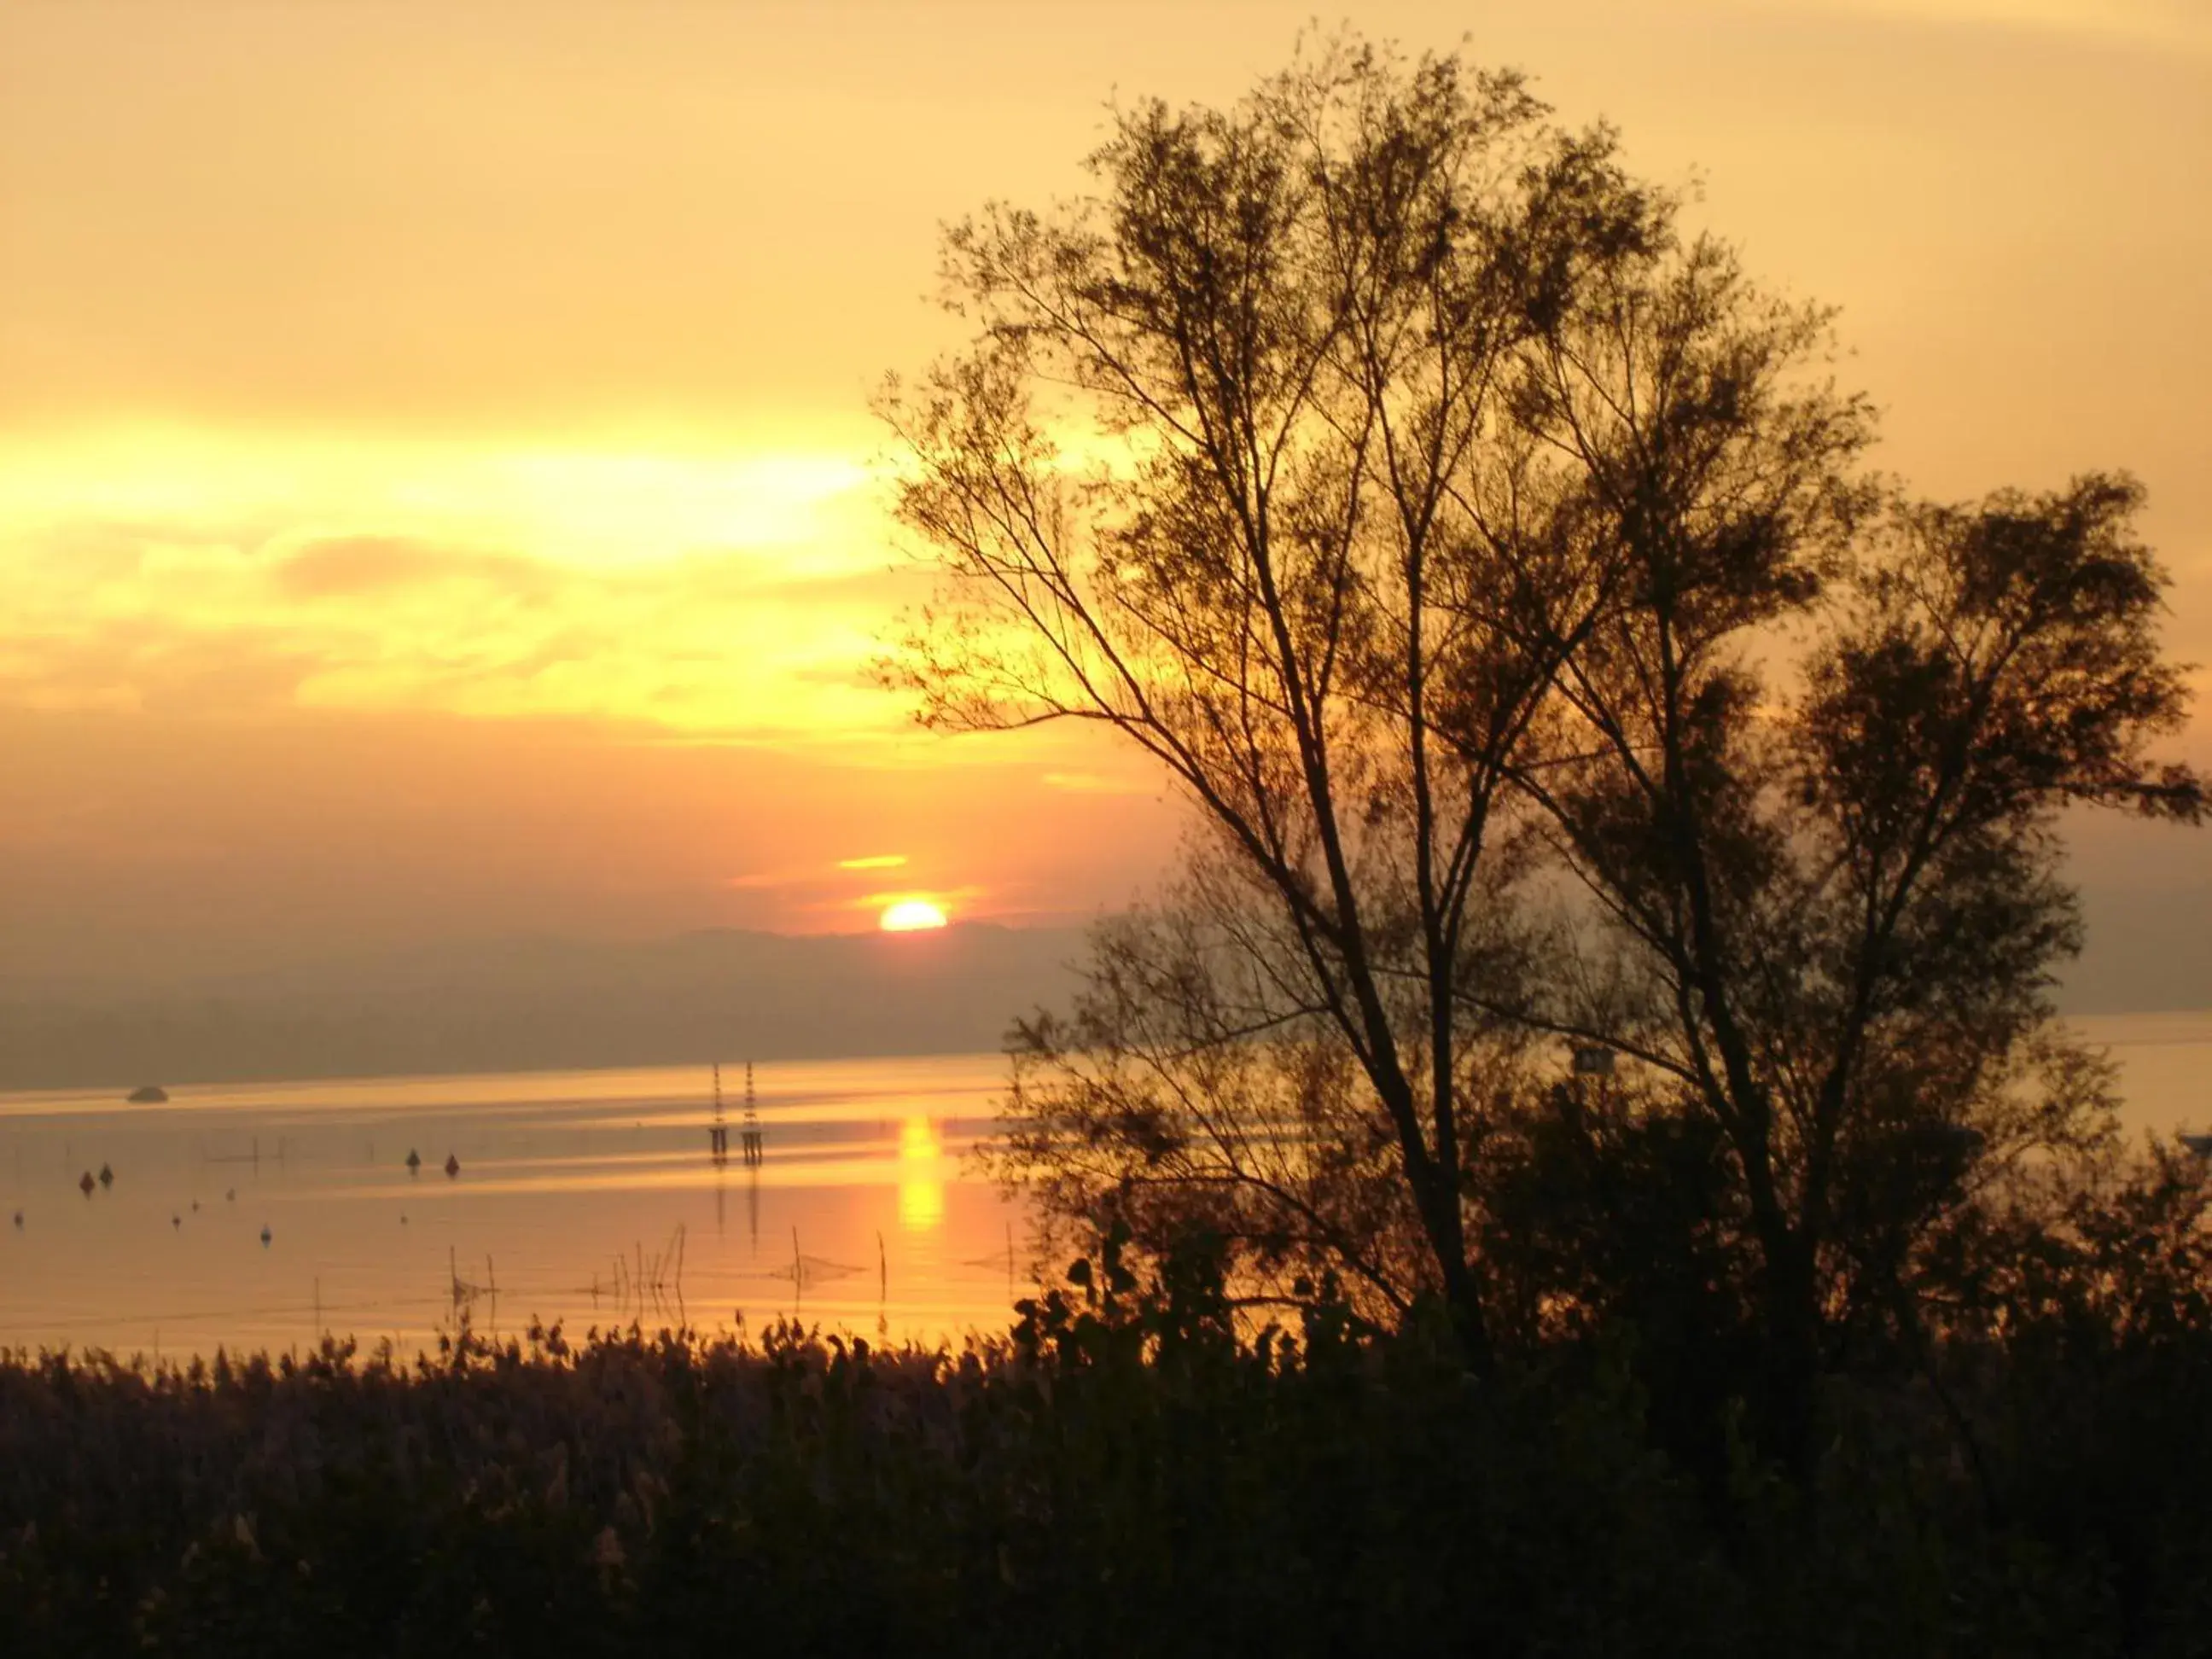 Lake view, Sunrise/Sunset in Hotel La Rondine